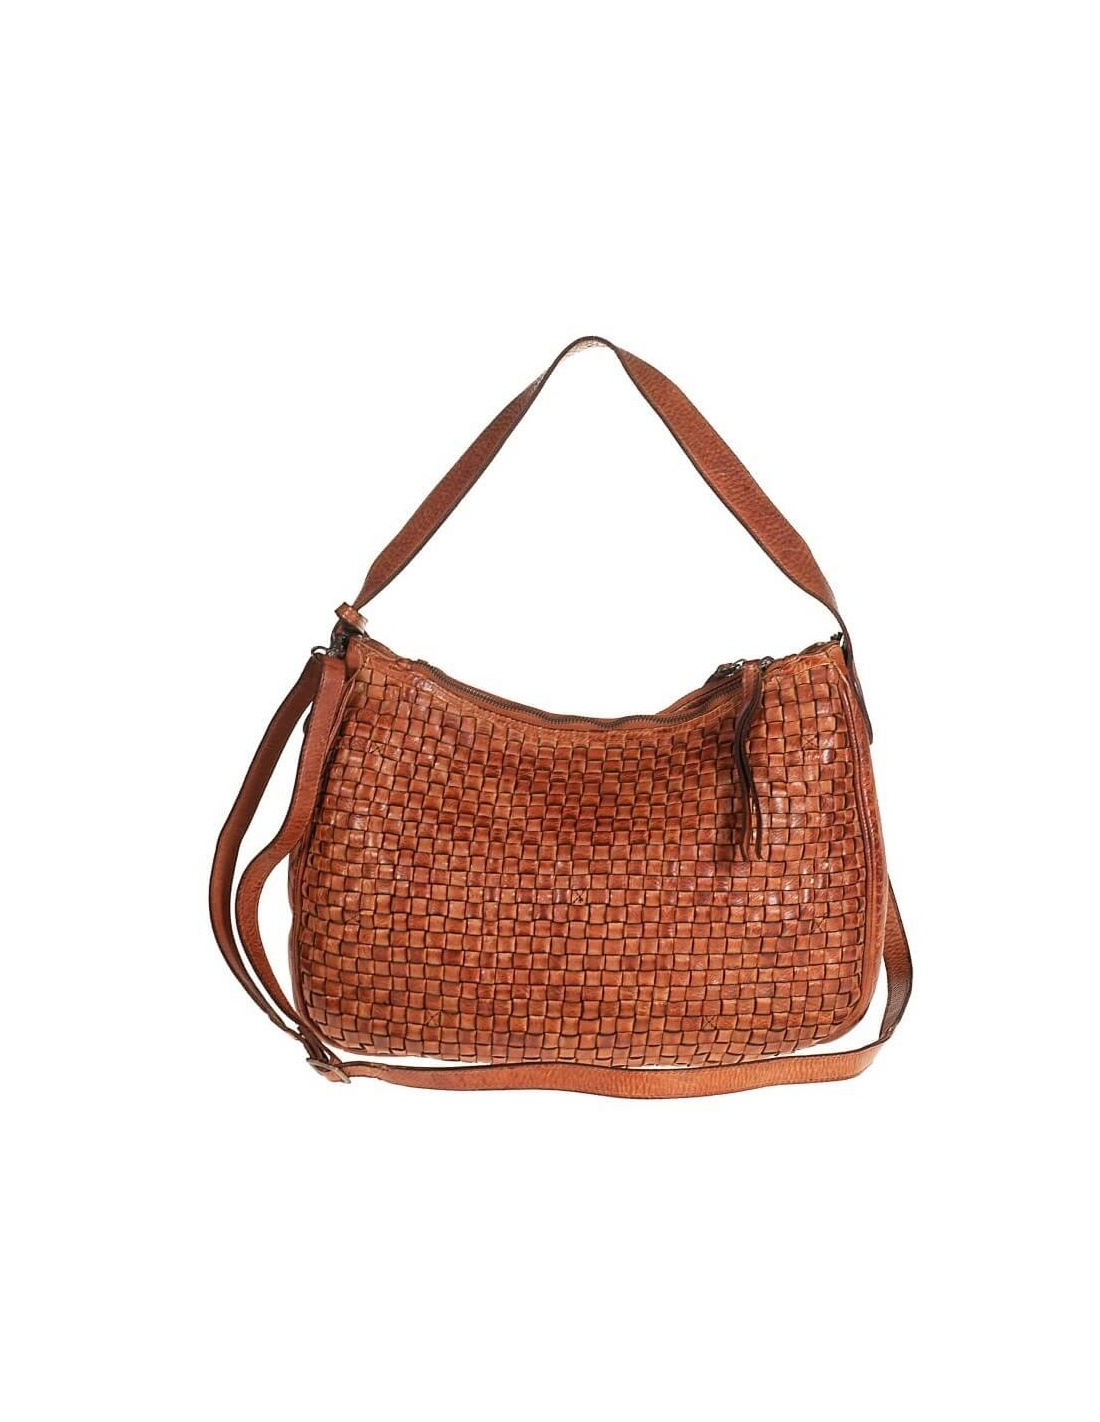 Premium Italian Leather Bags For Women, Handmade